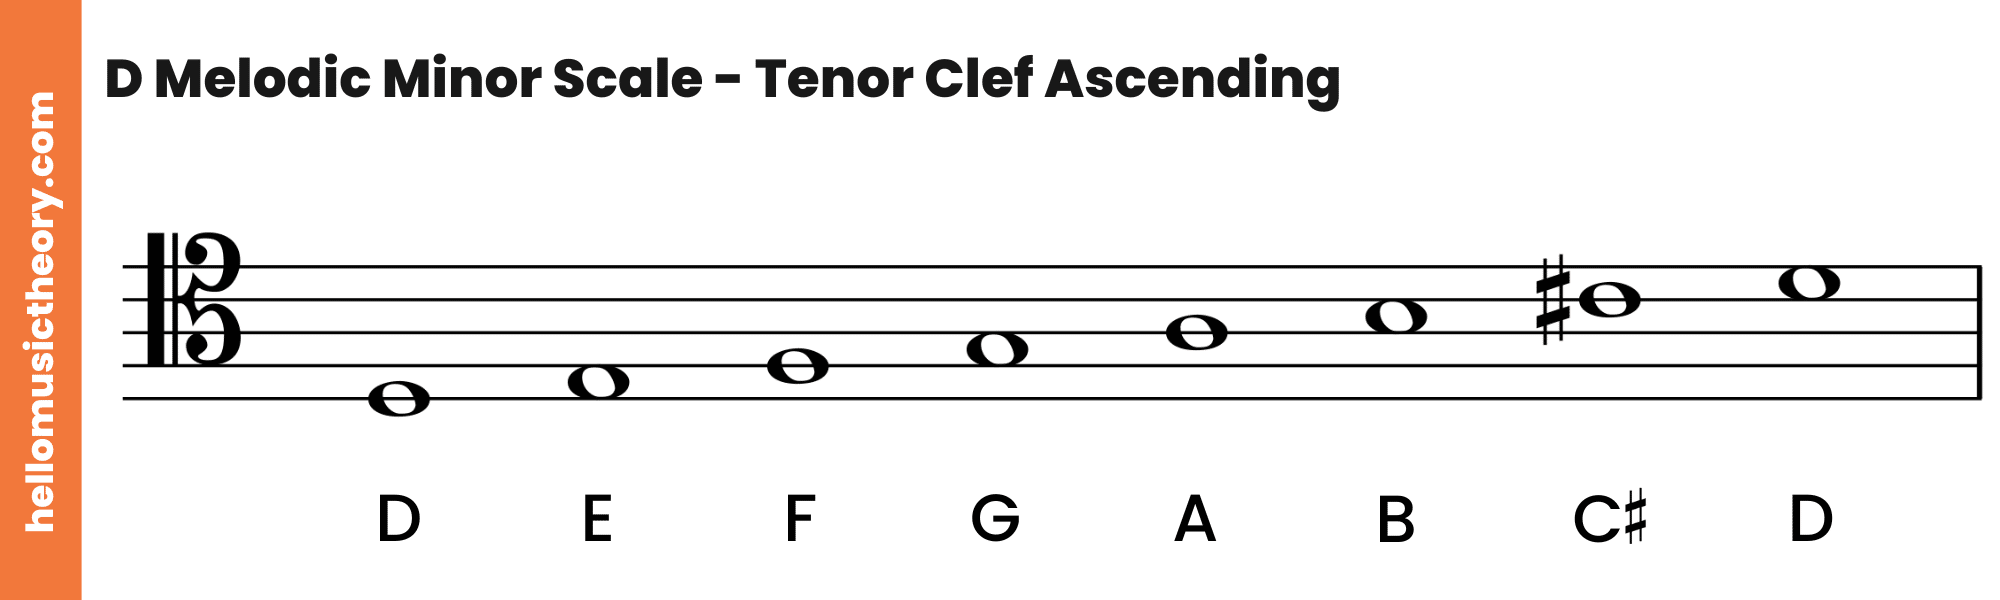 D Melodic Minor Scale Tenor Clef Ascending